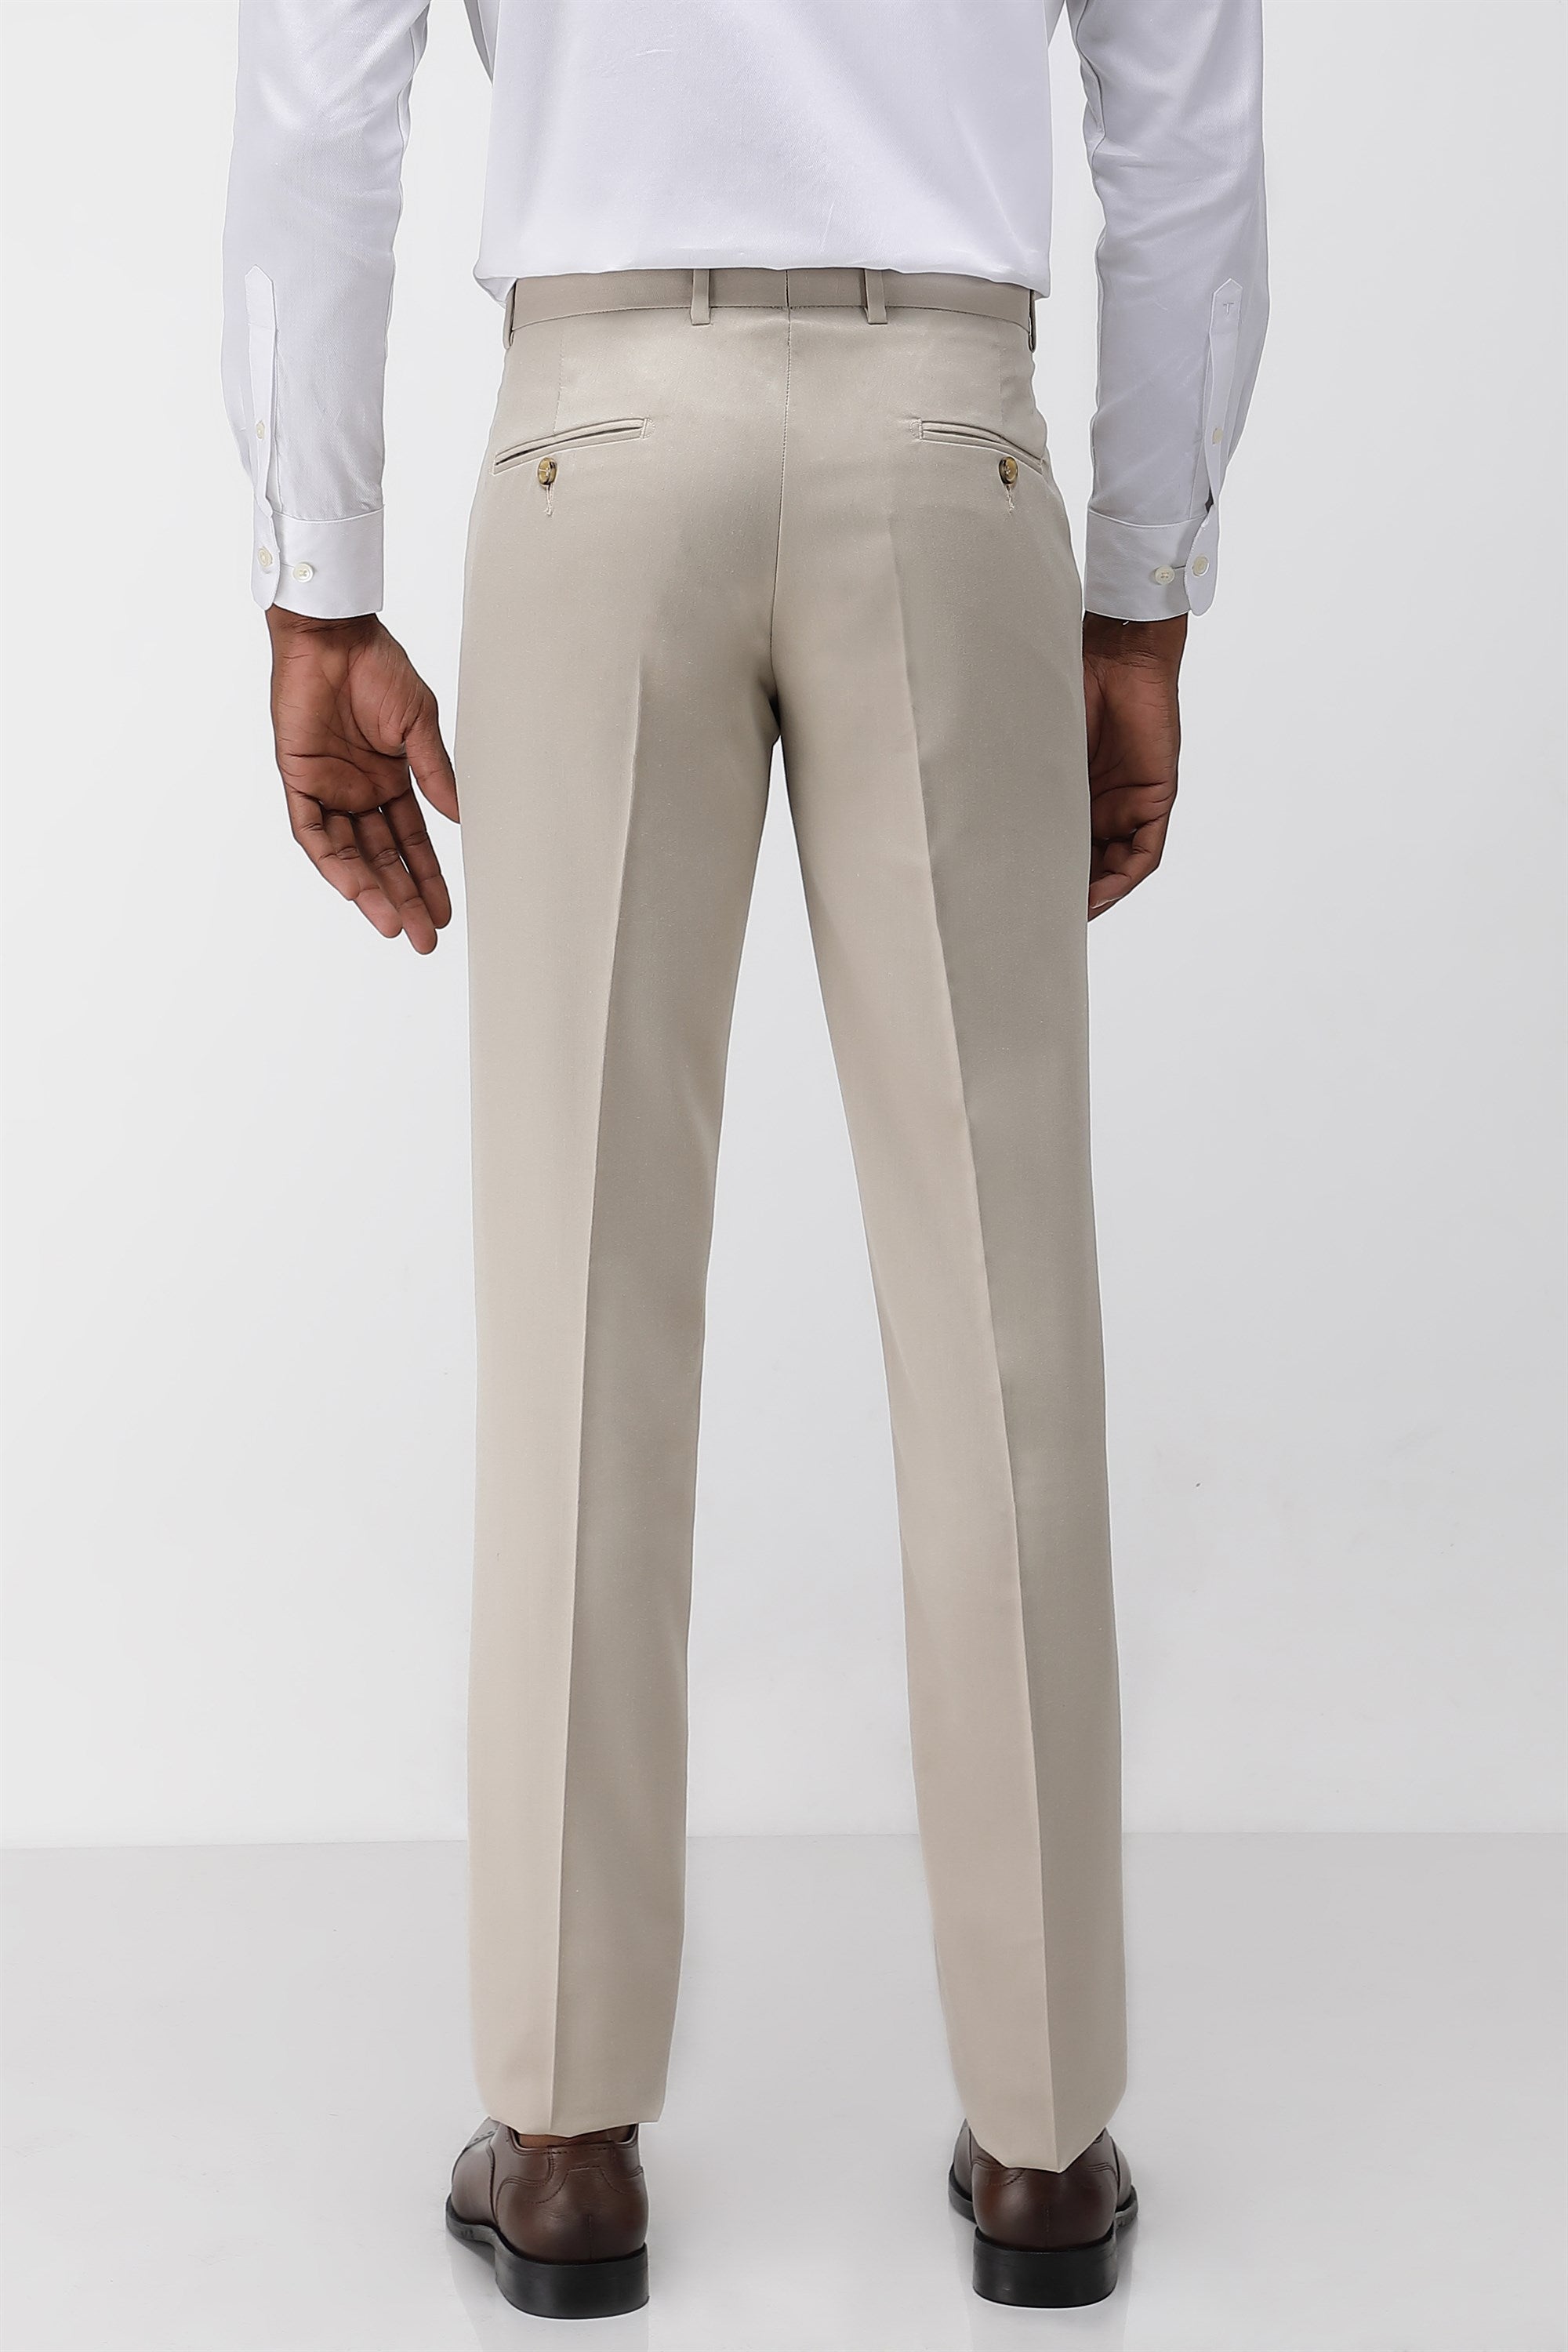 Buy Black Trousers & Pants for Men by Kryptic Online | Ajio.com